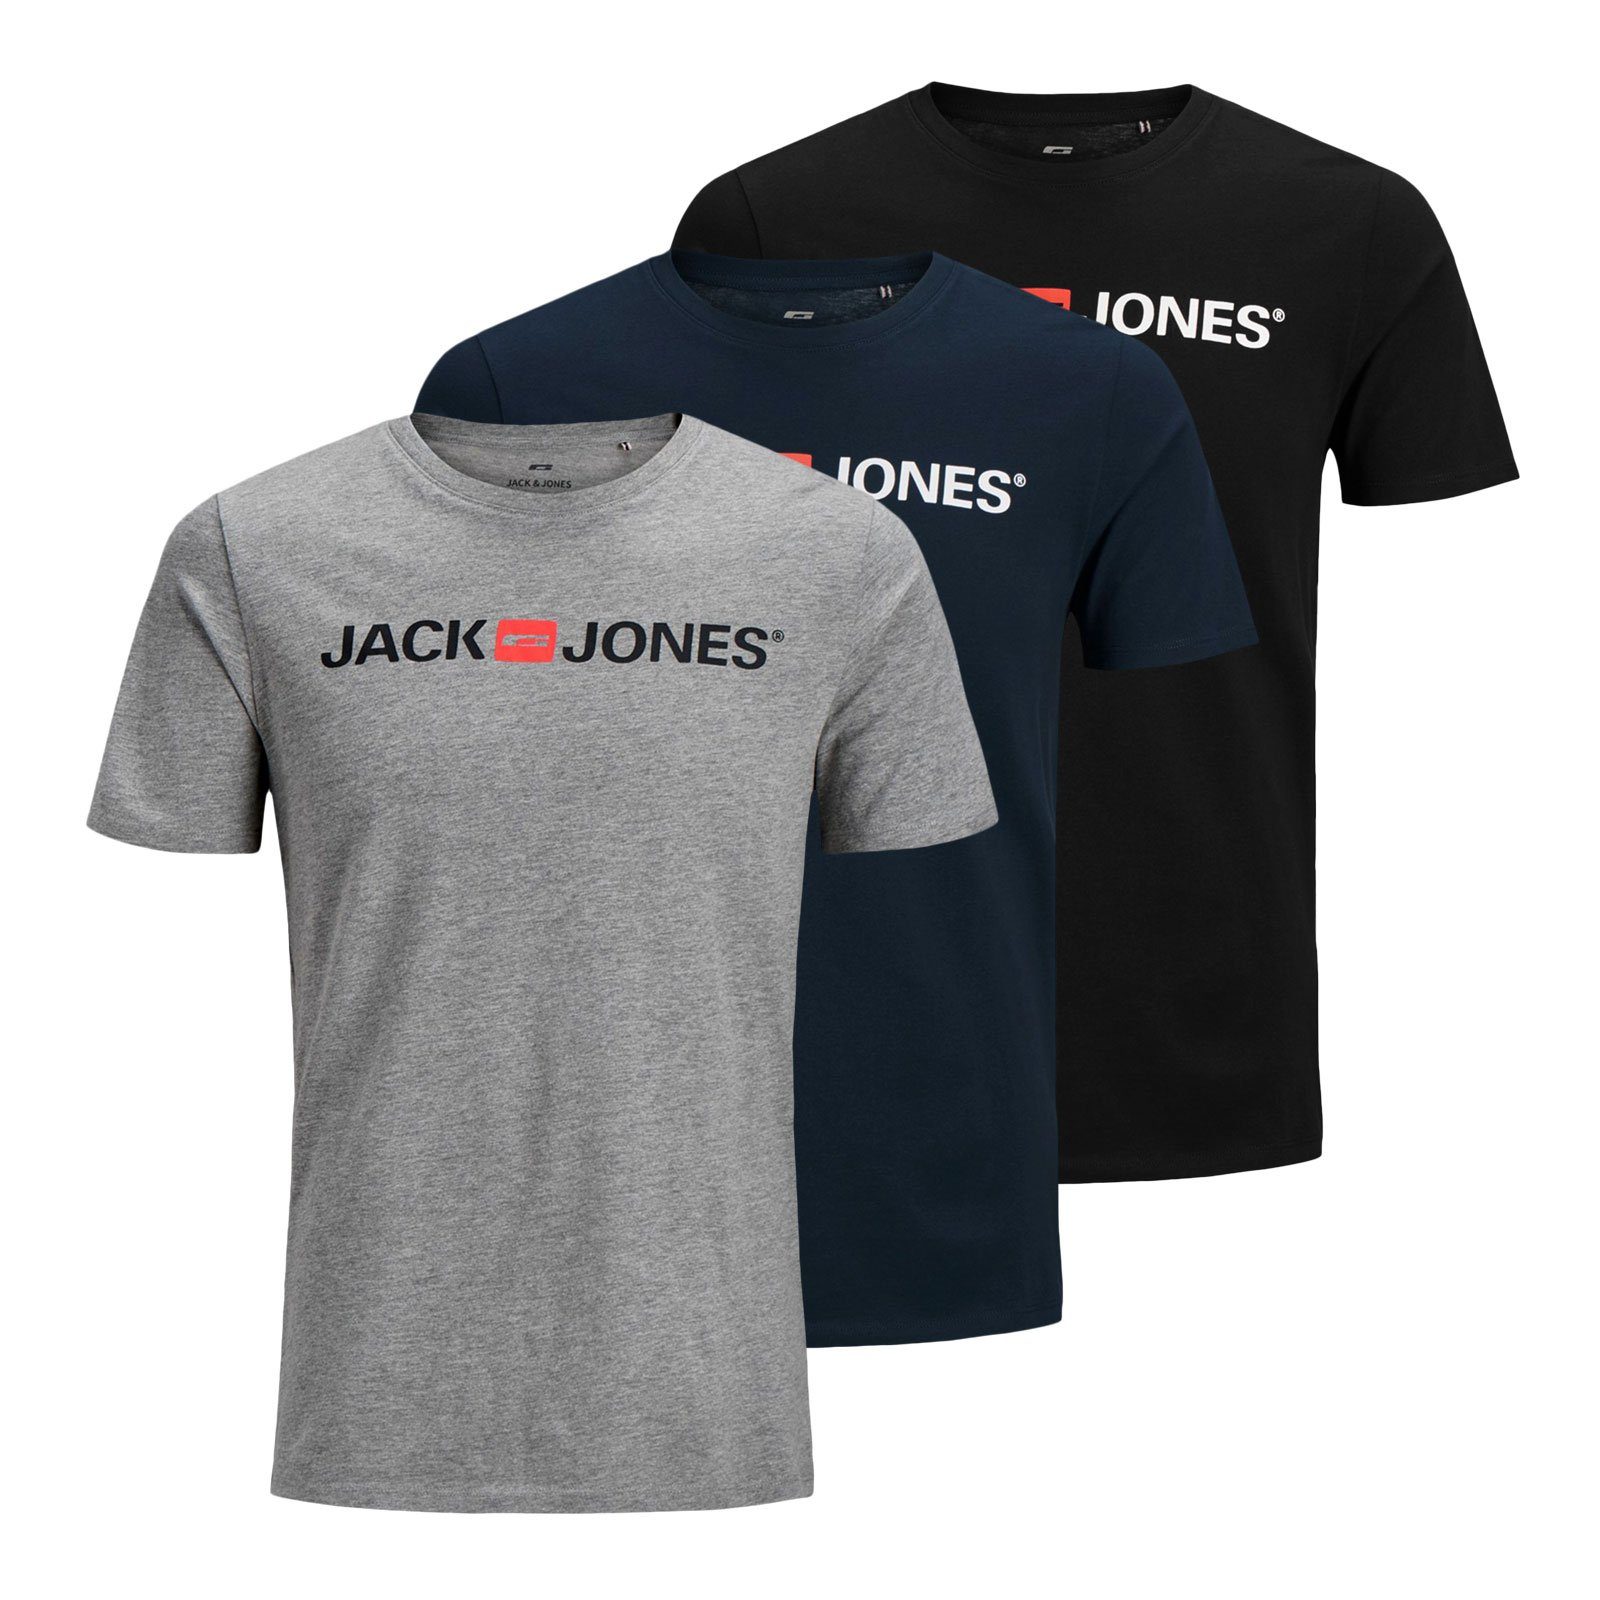 Jack & Jones T-Shirt / black 12137126 - Pack navy mel. / Markenschriftzug blazer Tee Crew grey Neck Logo light mit 3er